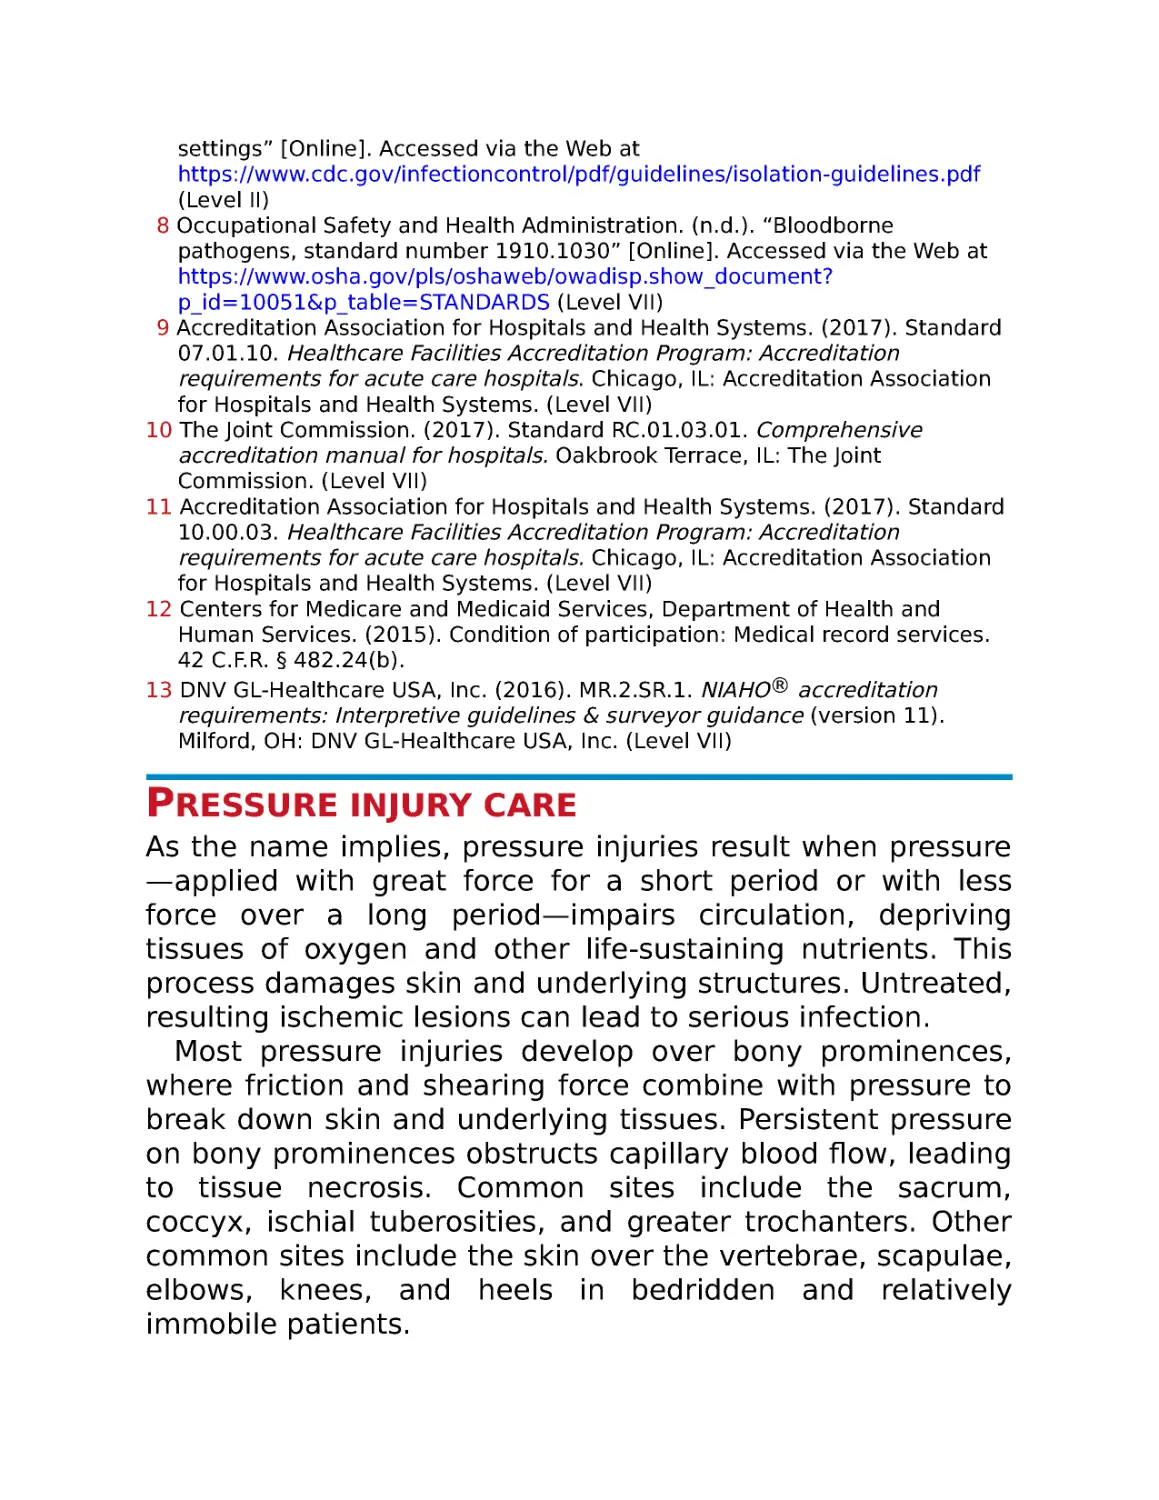 Pressure injury care